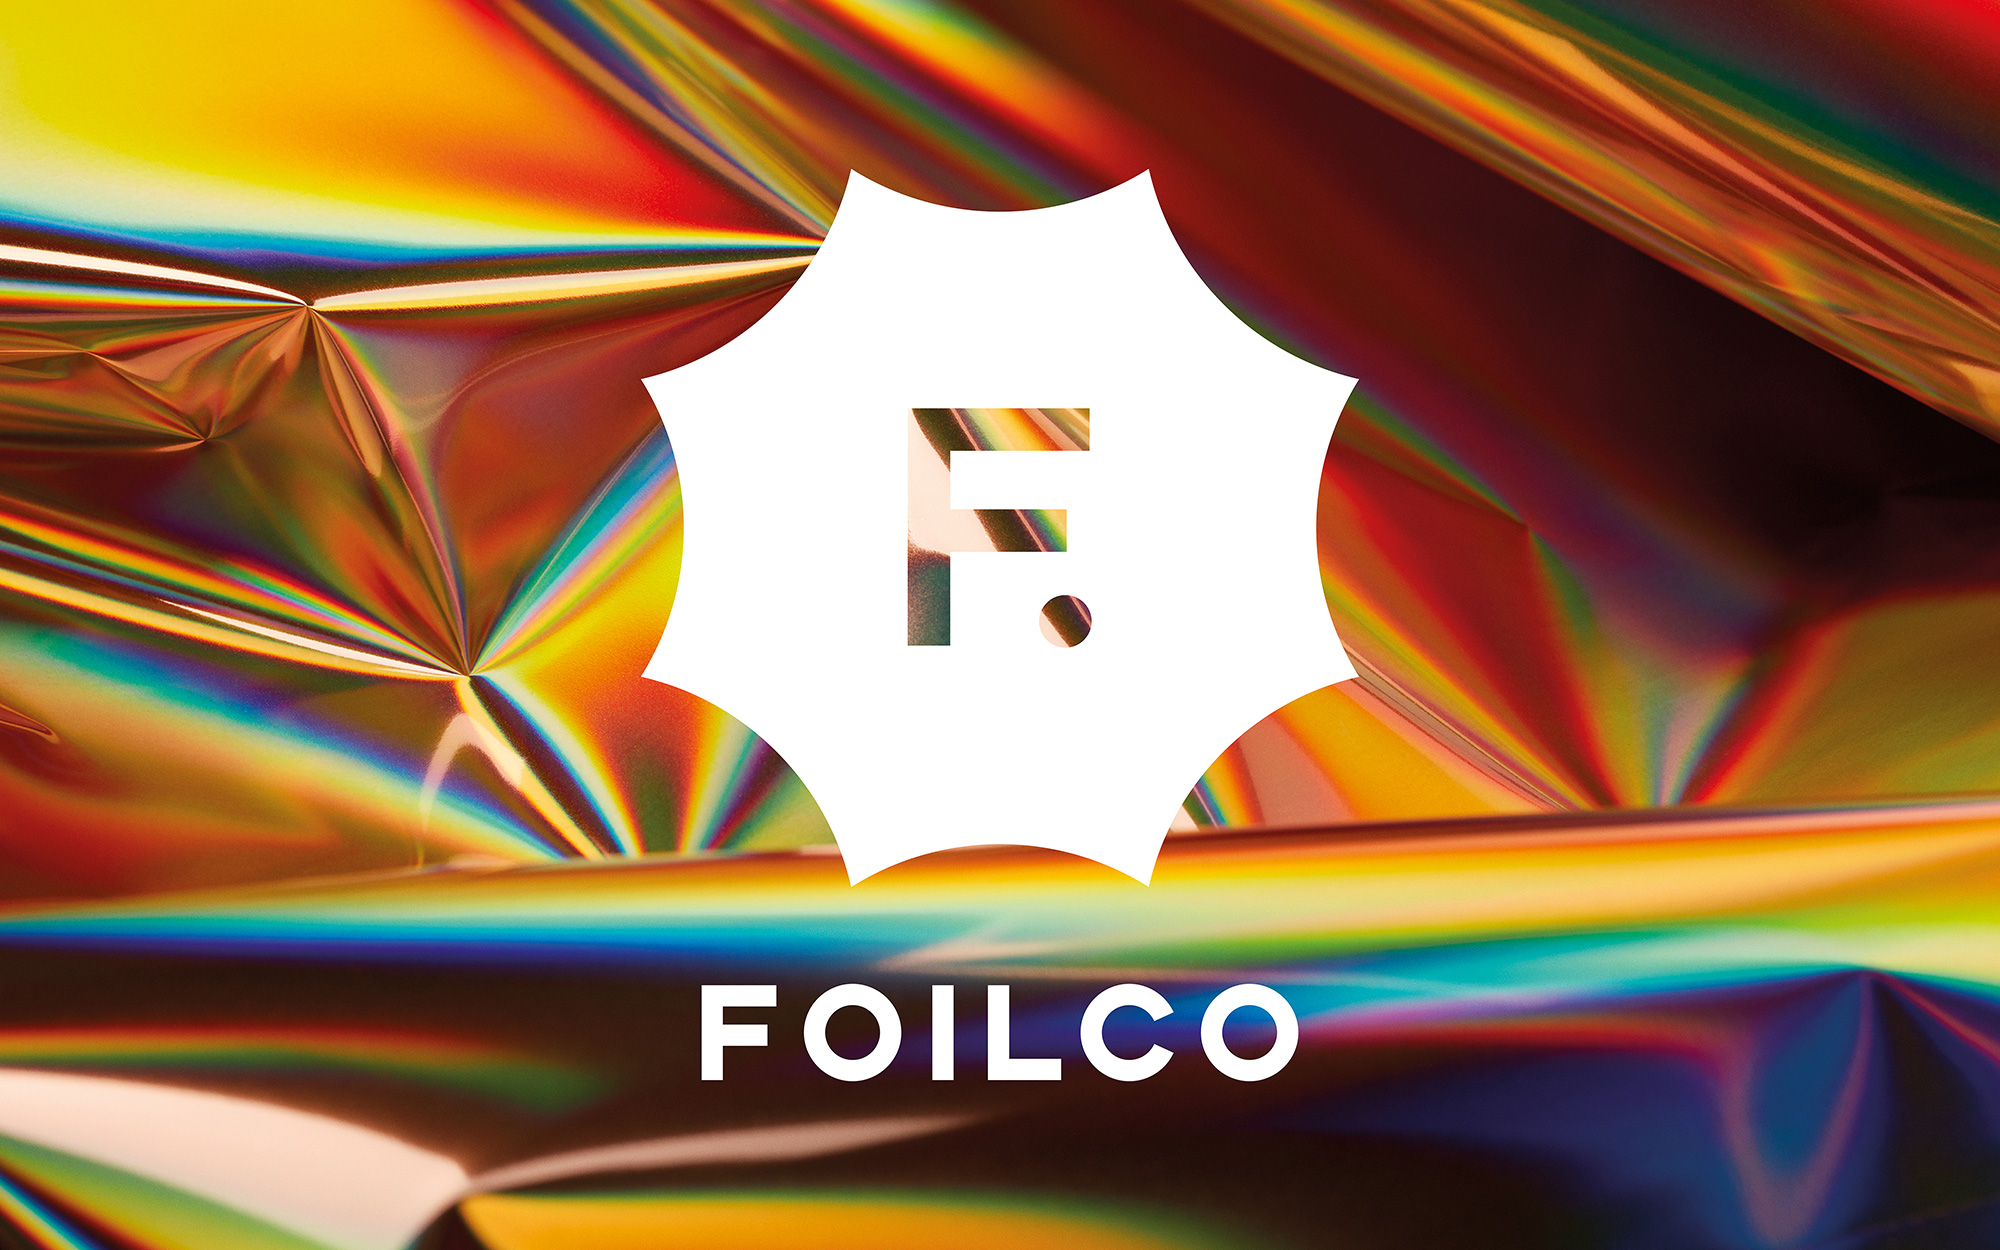 New Logo and Identity for Foilco by Studio DBD